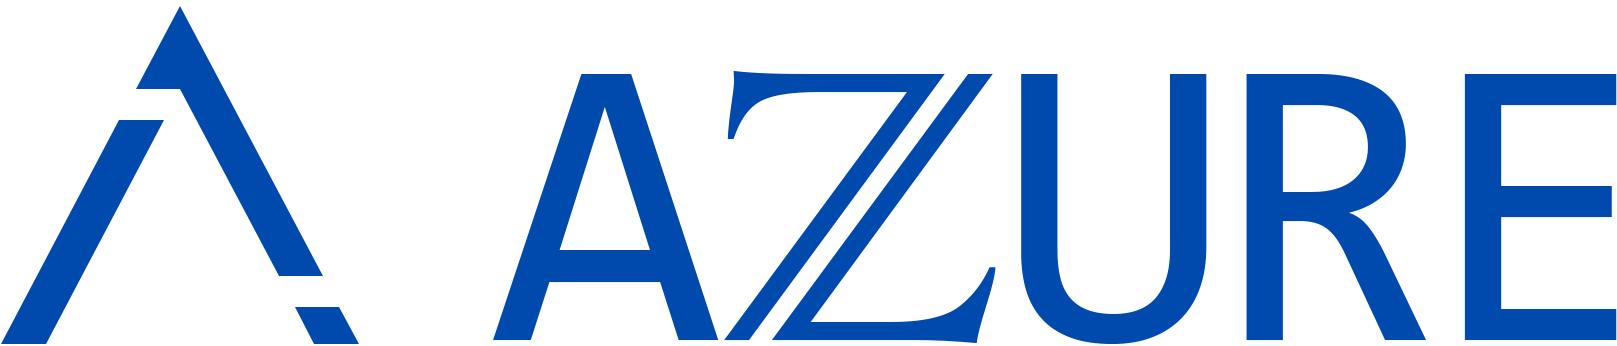 AZURE Logo